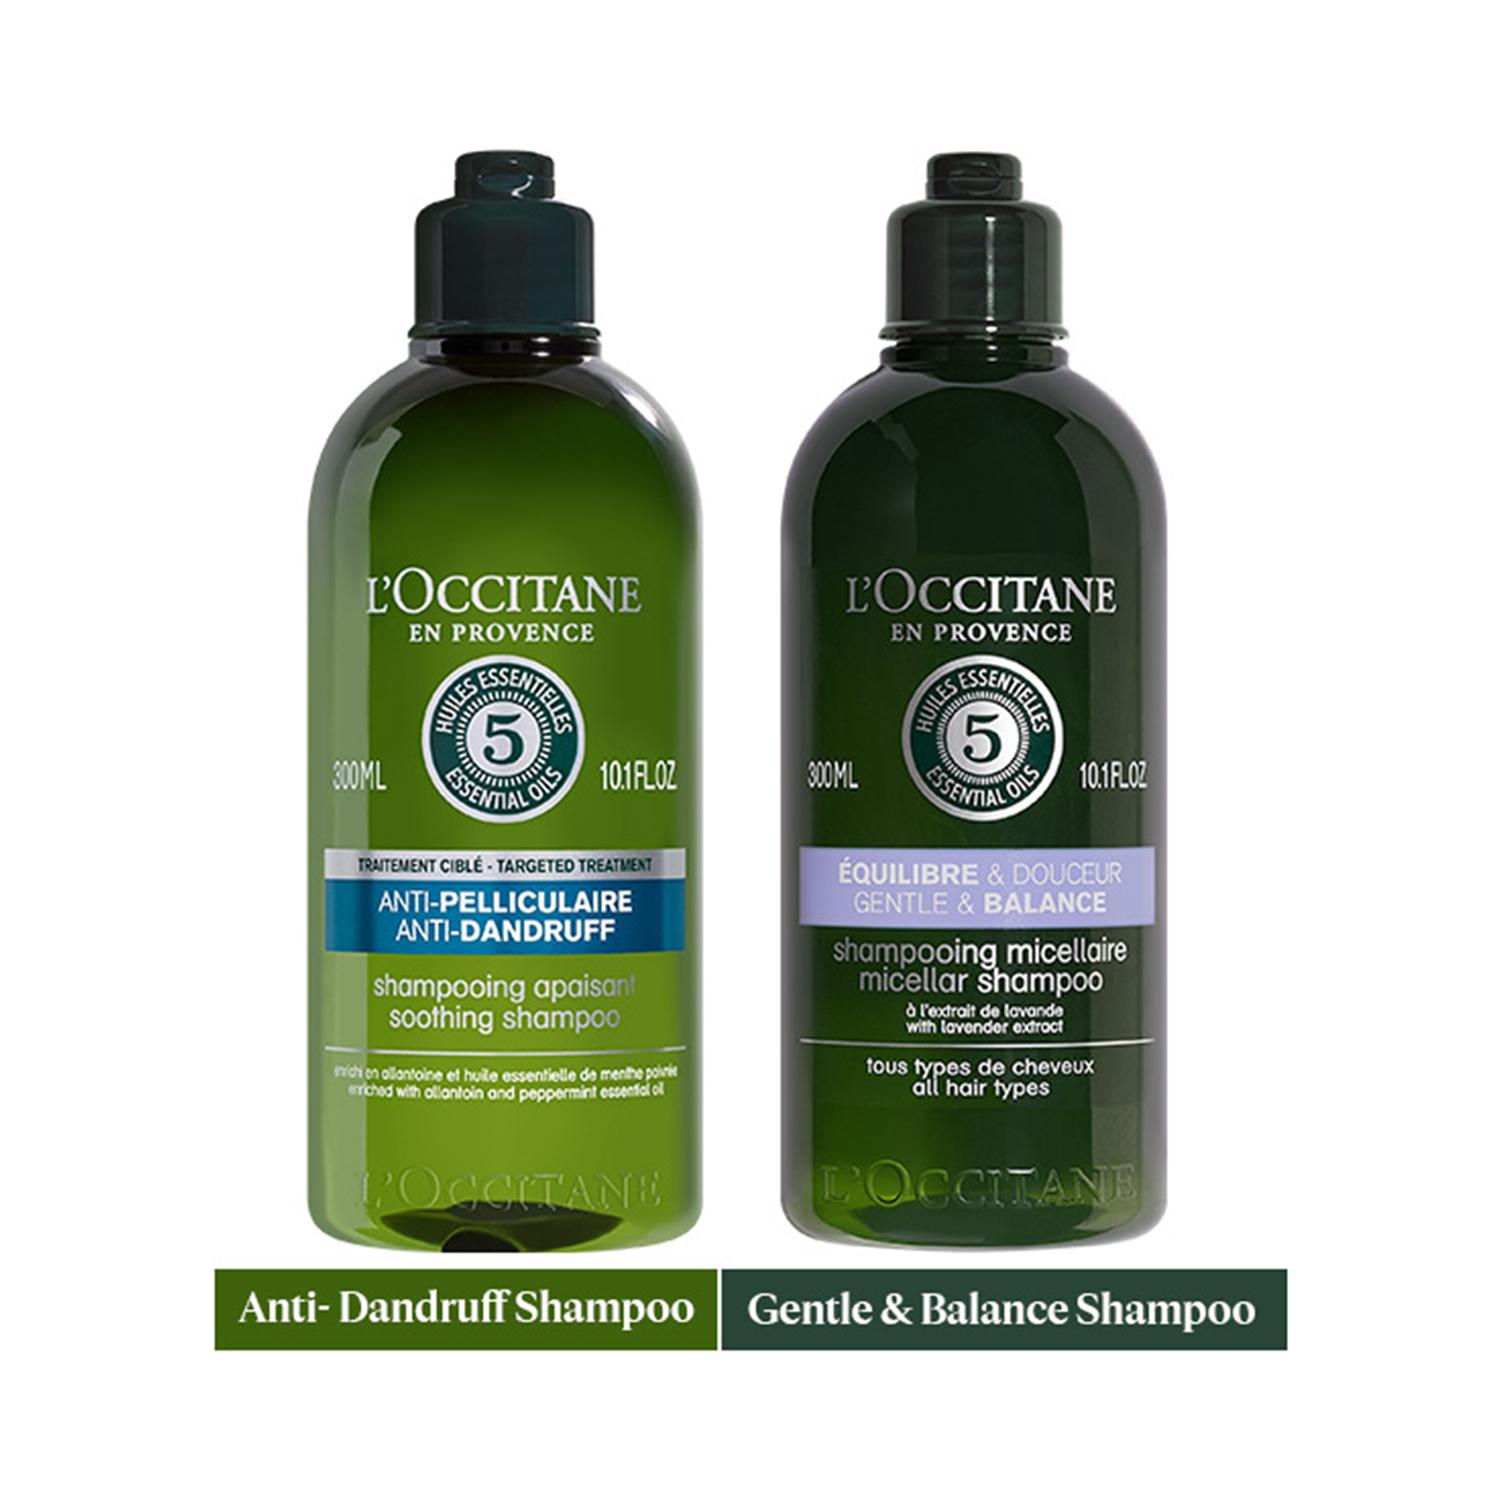 L'Occitane Anti-Dandruff & Gentle Cleansing Shampoo Duo Combo